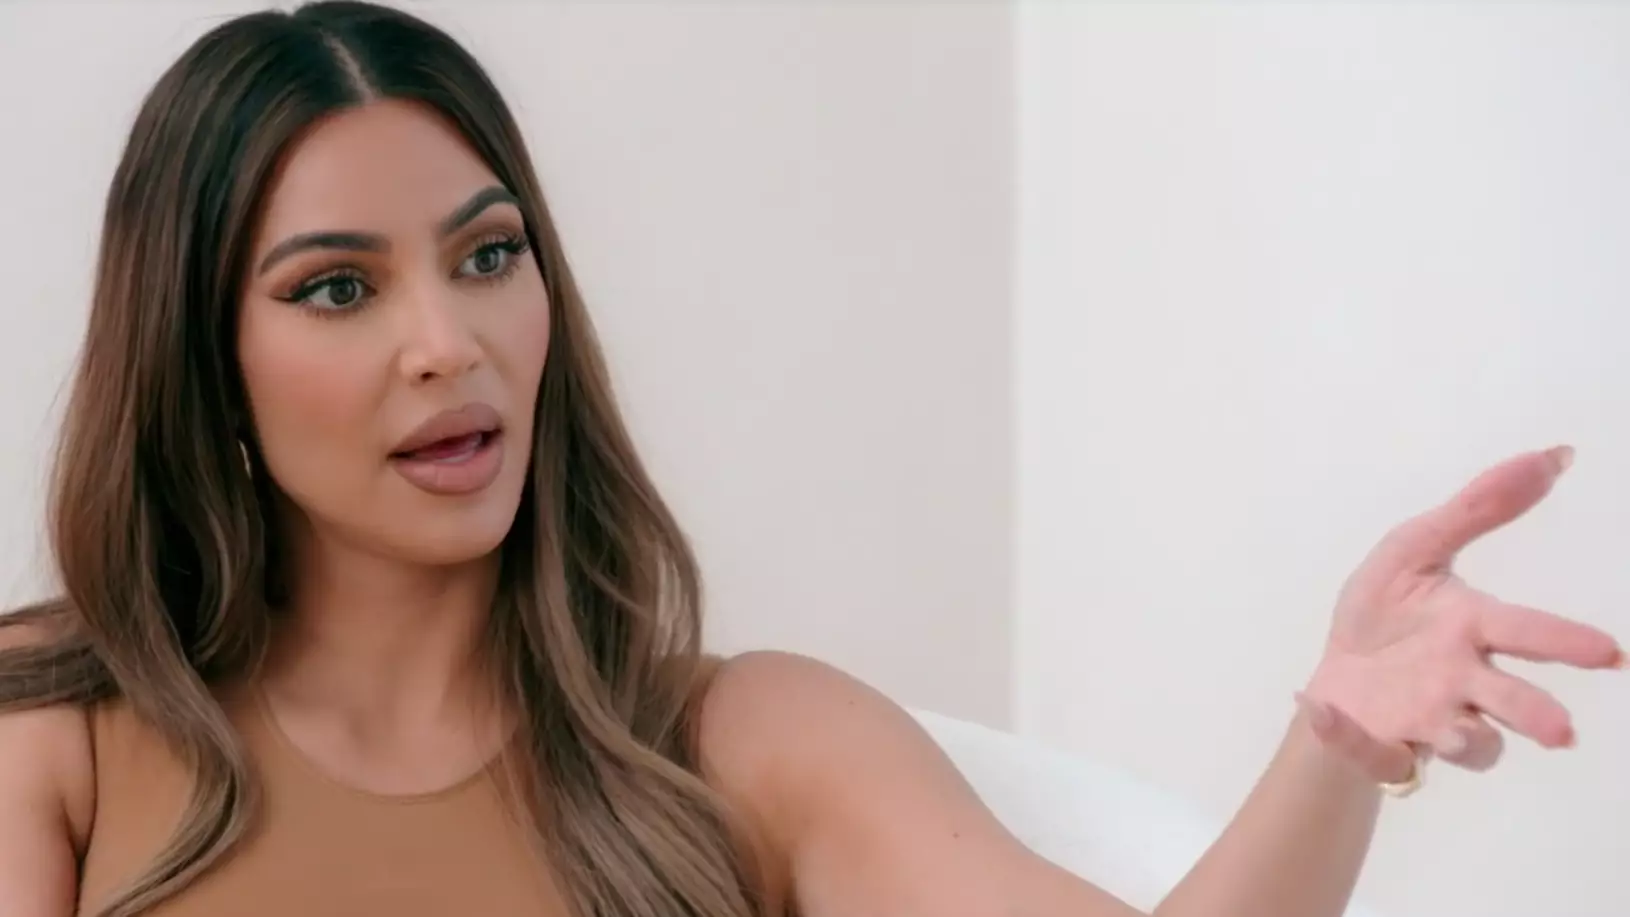 Keeping Up With The Kardashians: Kim Kardashian Finally Breaks Her Silence On Kanye Split In Emotional Clip